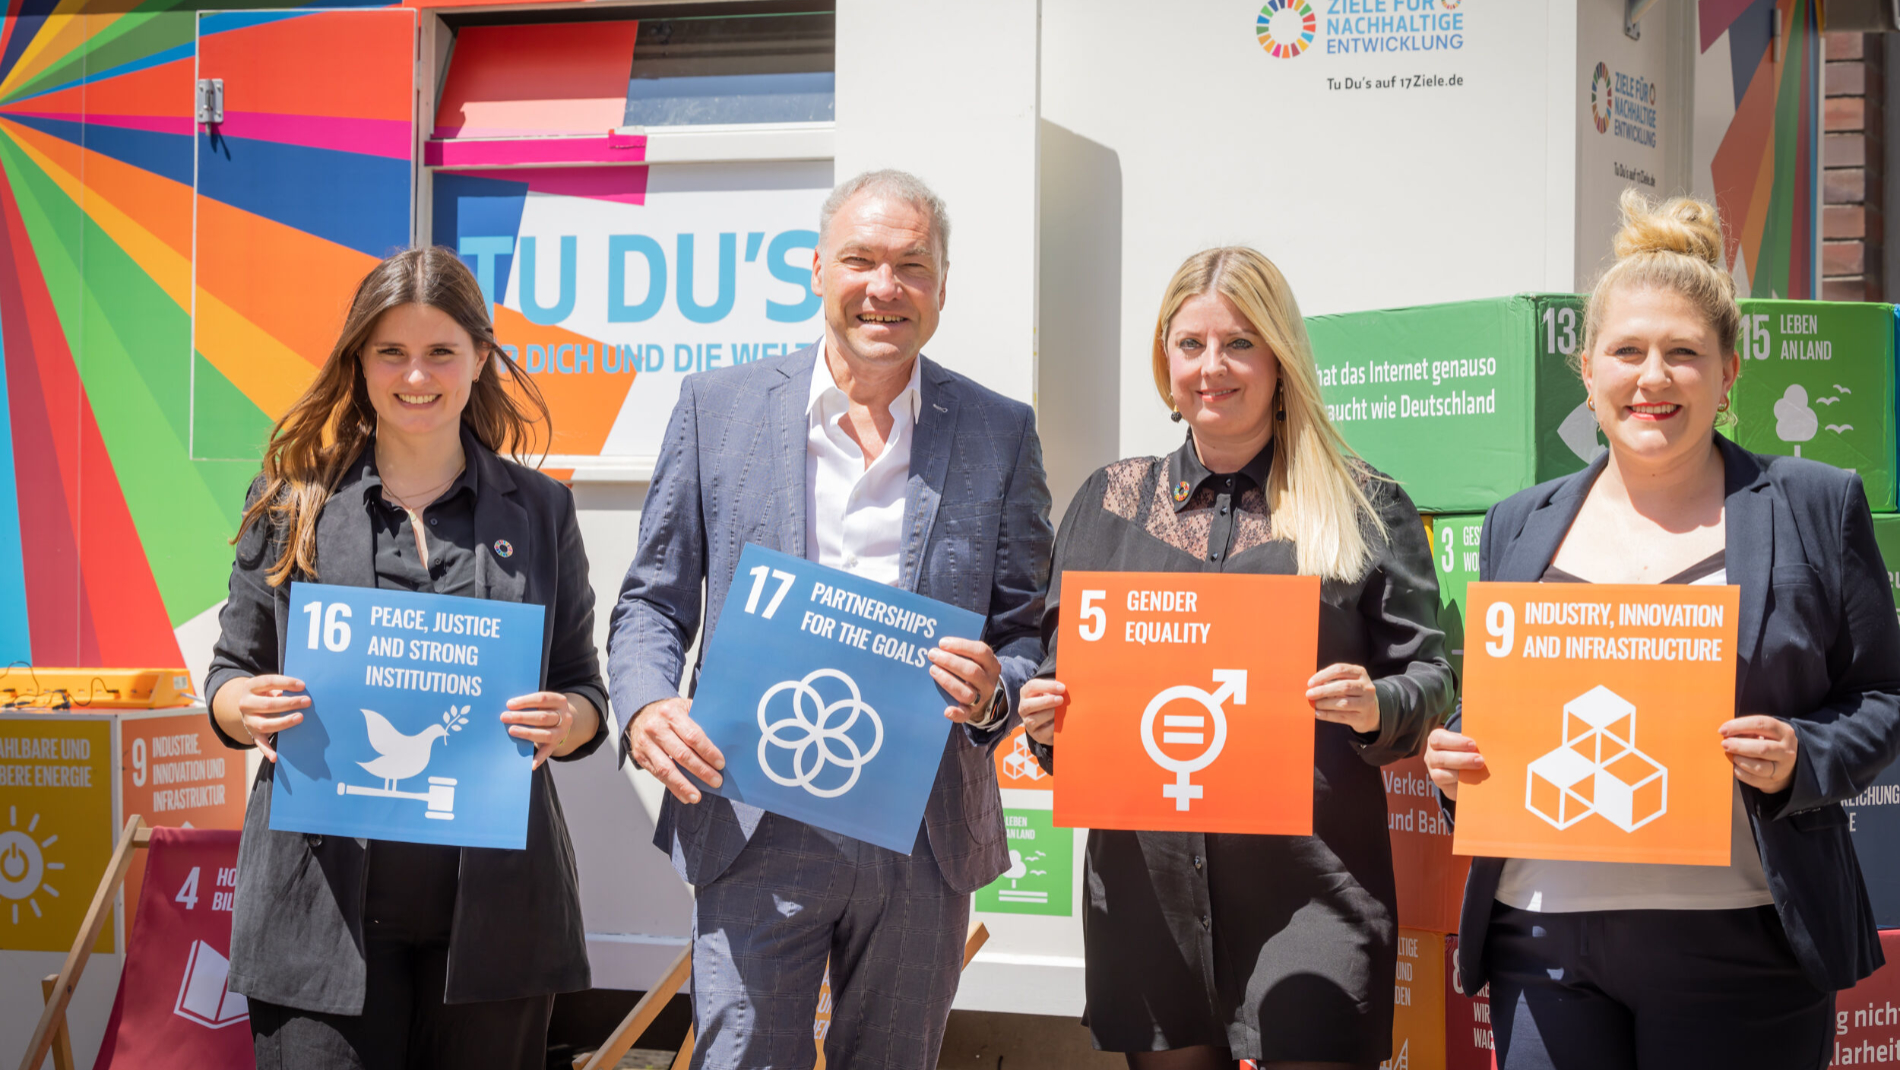 Sustainable Development Goals (SDGs): Kristina Löhr (Engagement Global), Olaf Schmidt (Messe Frankfurt), Kerry Bannigan (Fashion Impact Fund), Stephanie Wüst (Councilwoman Frankfurt)